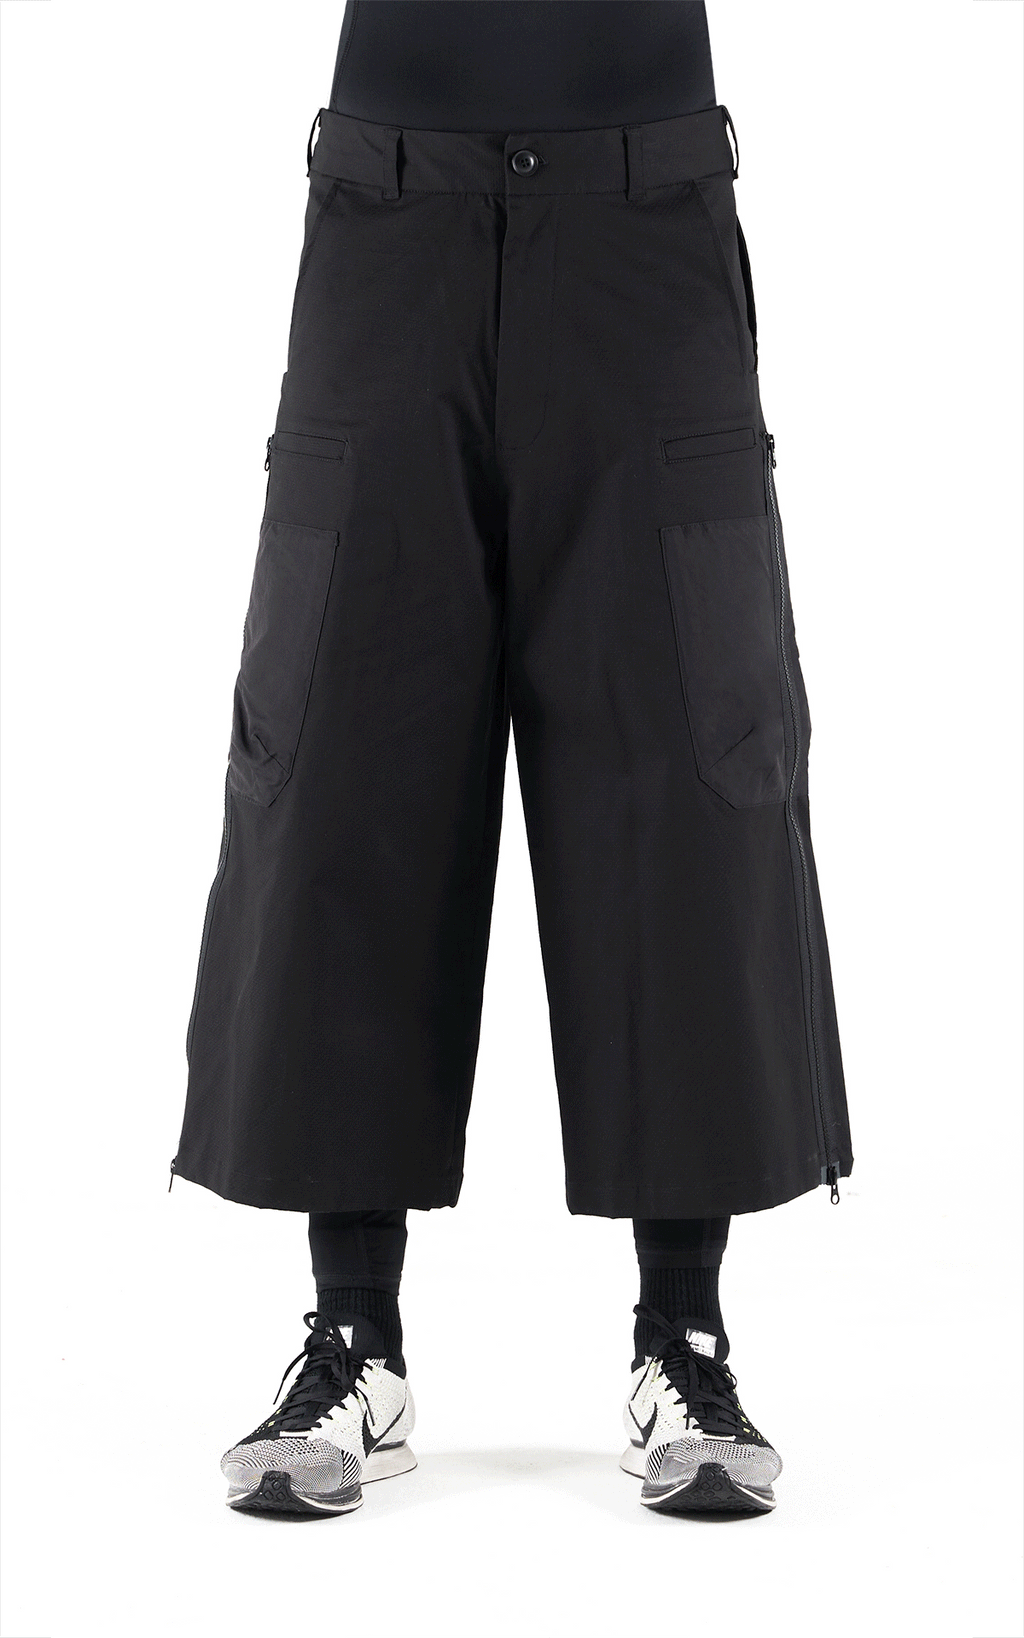 1. "IAIDŌ" Hakama Cargo Pants